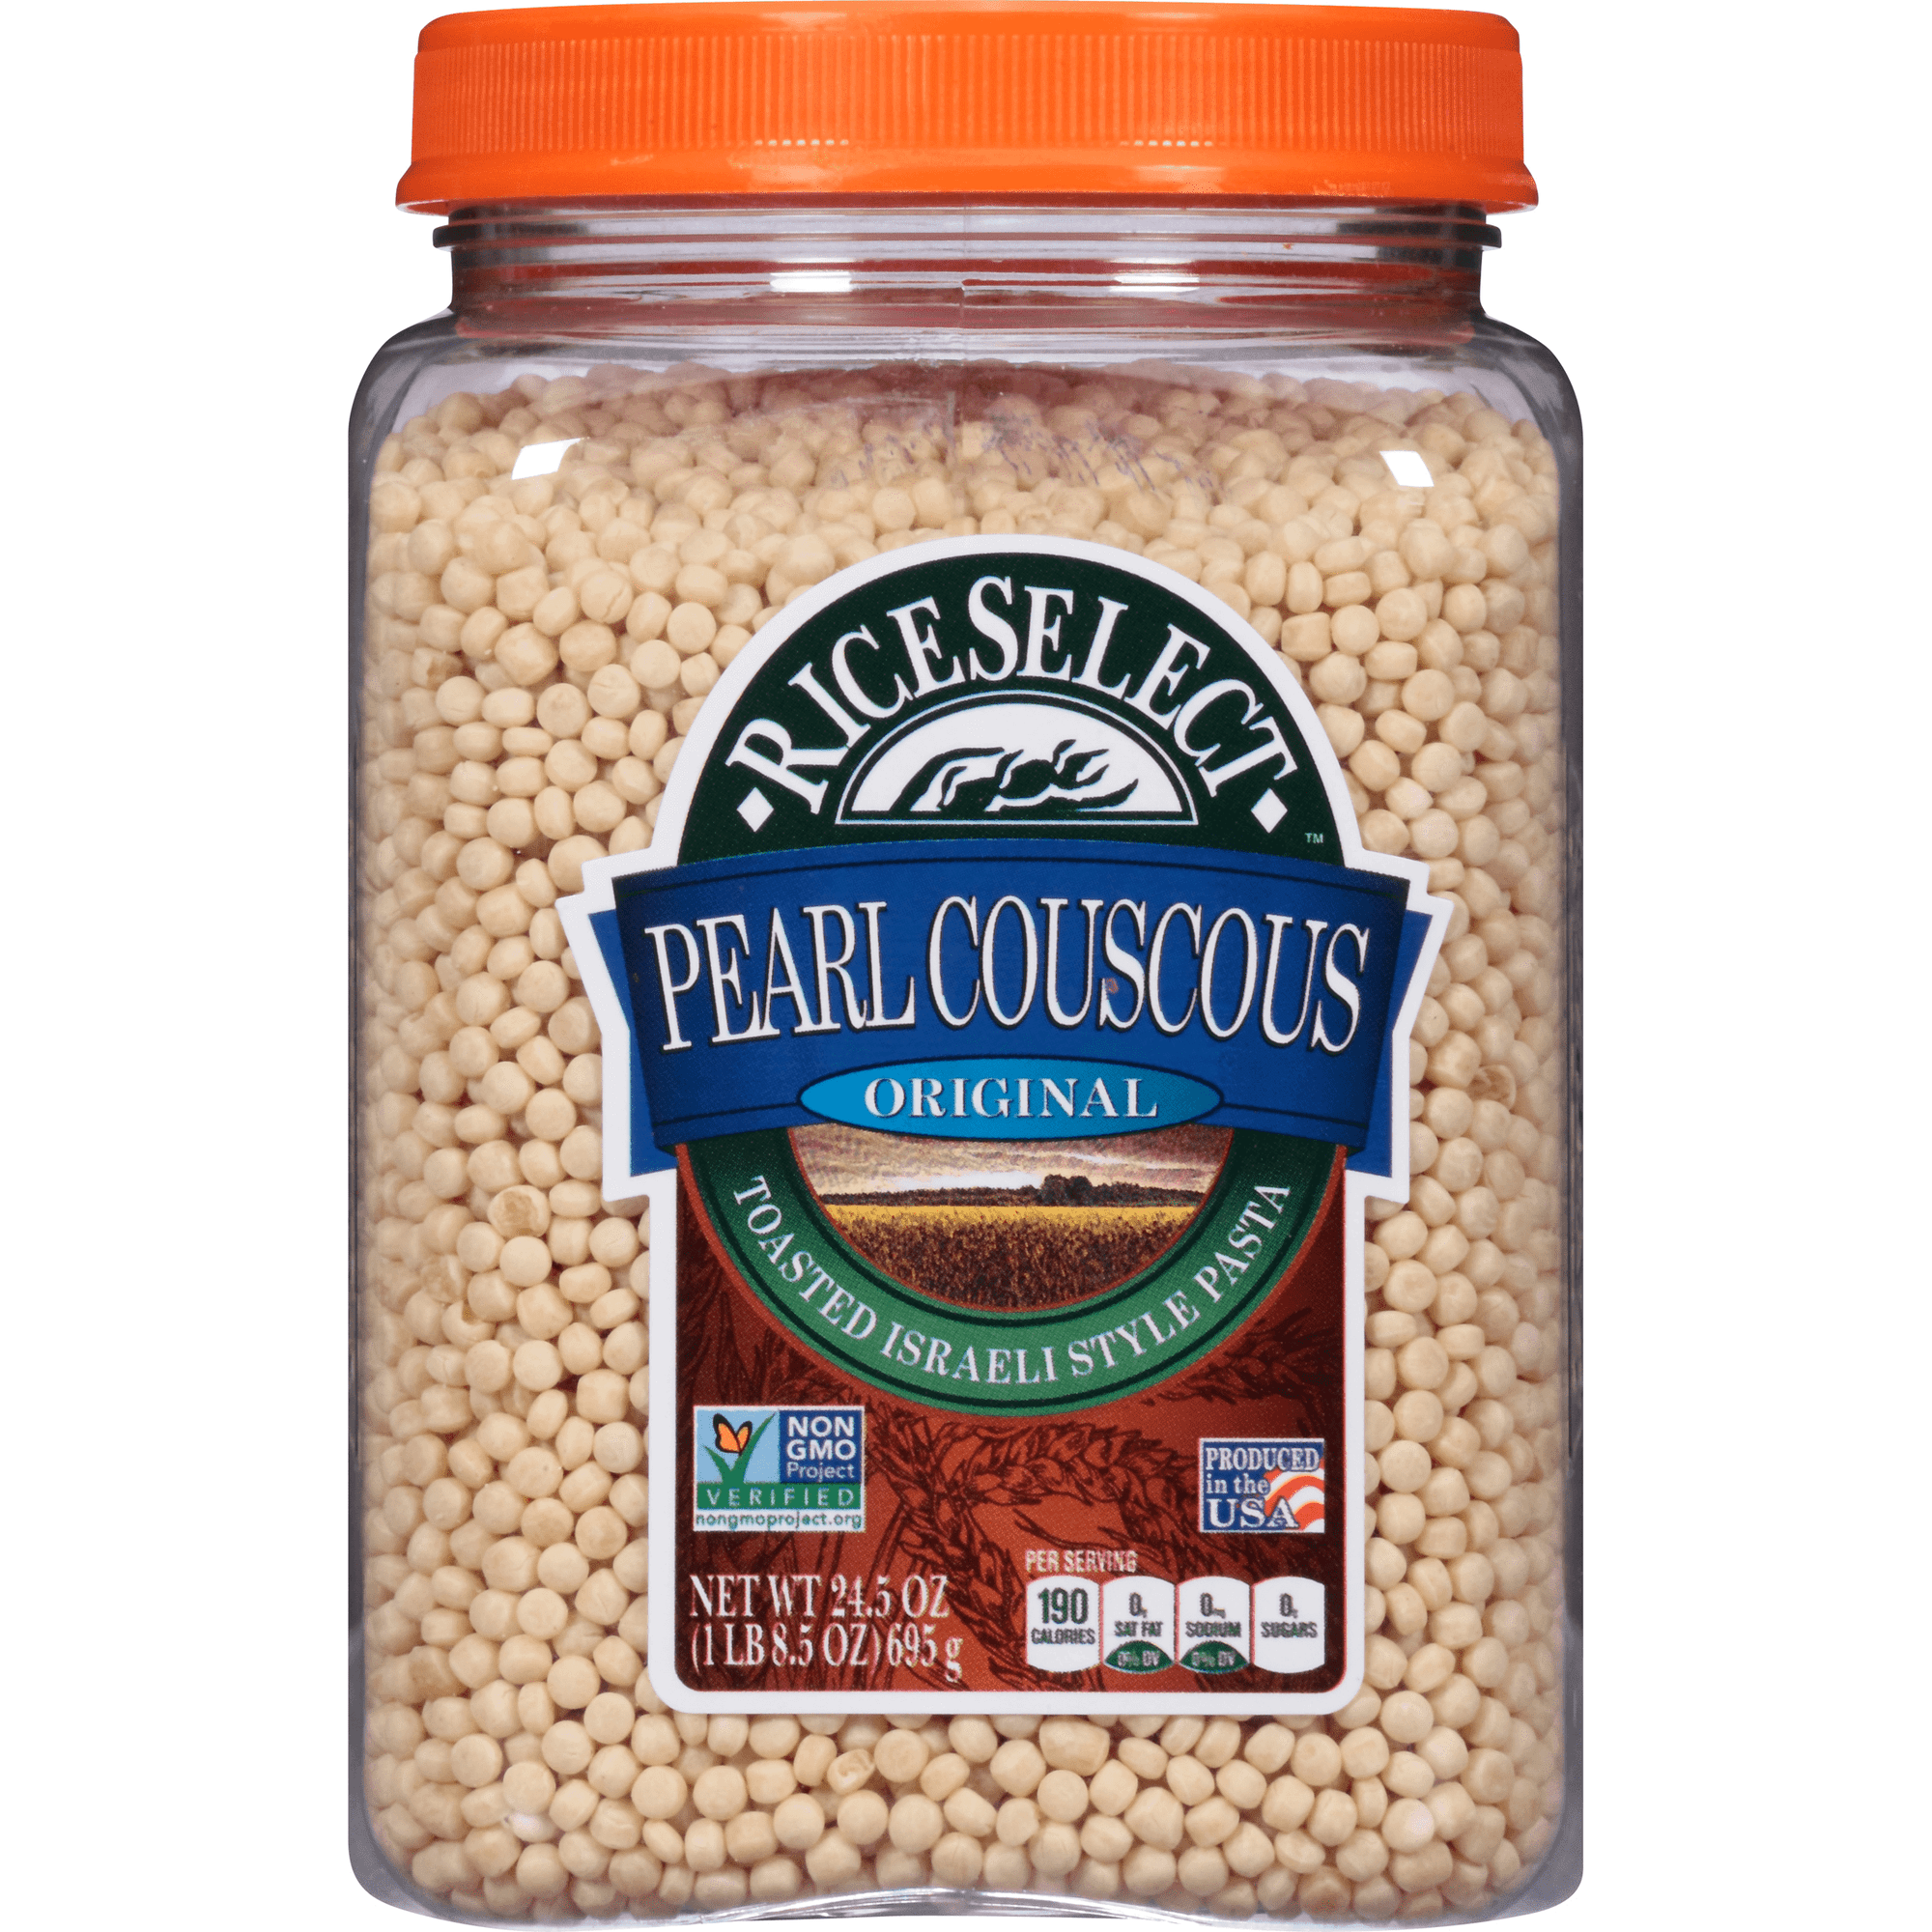 Rice Select Pearl Couscous Original, 24.5 Oz